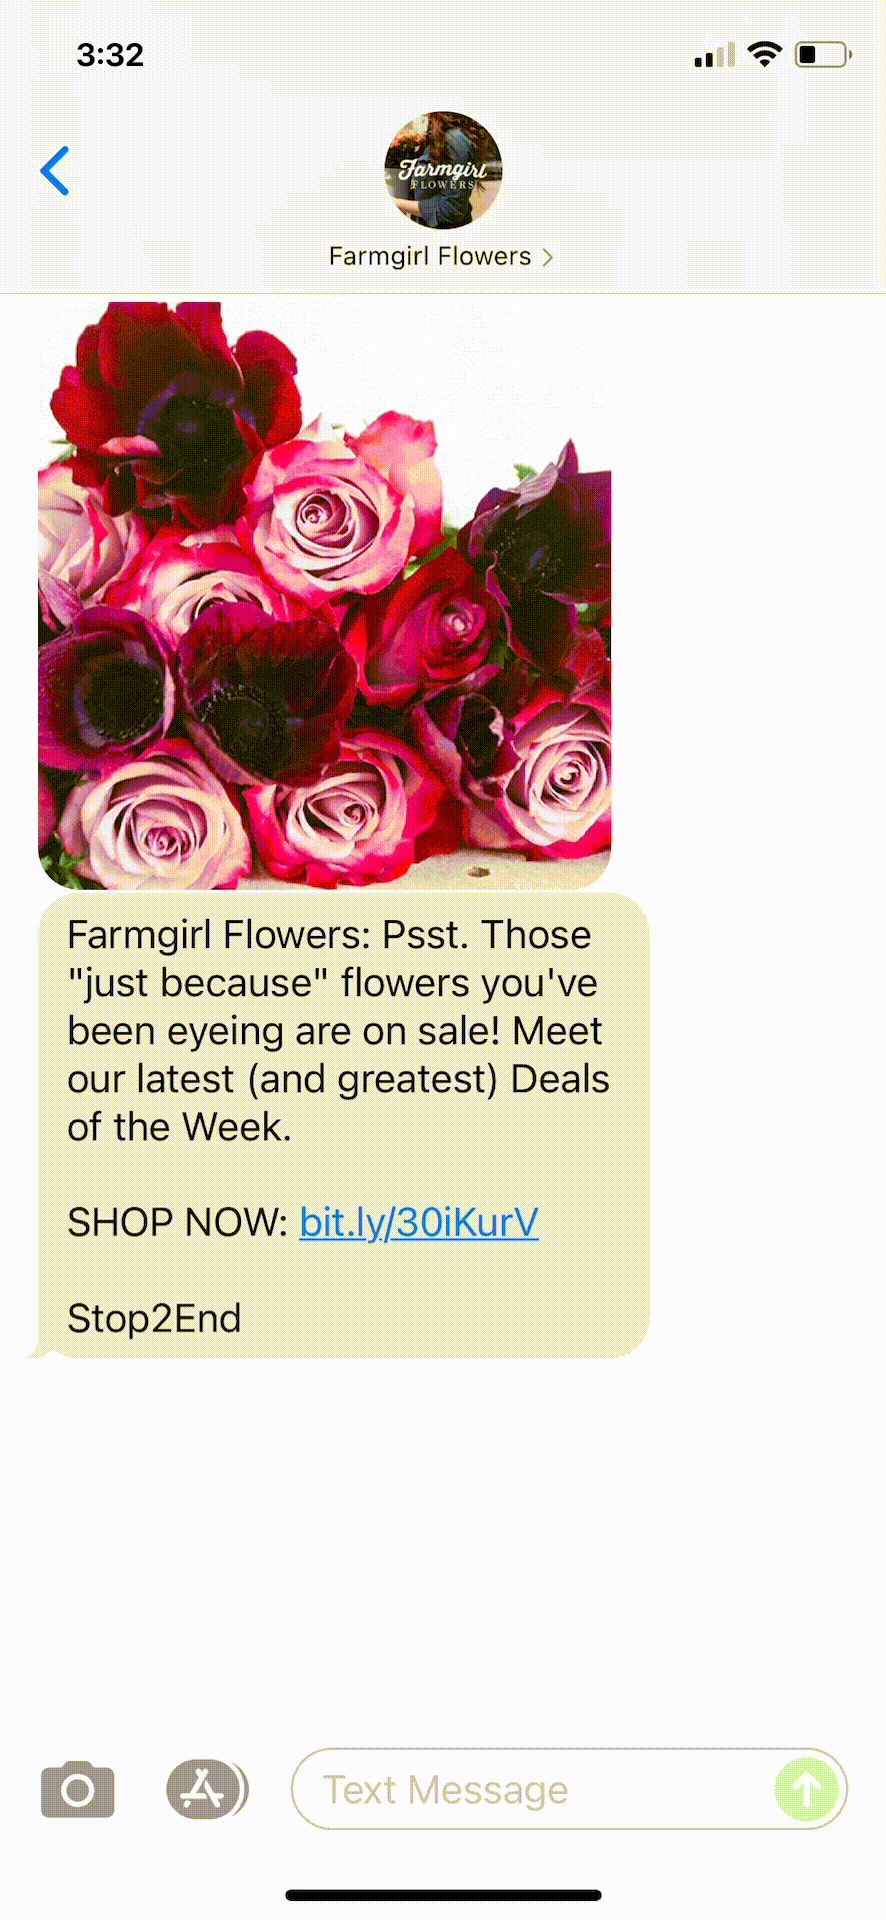 Farmgirl-Flowers-Text-Message-Marketing-Example-10.11.2021